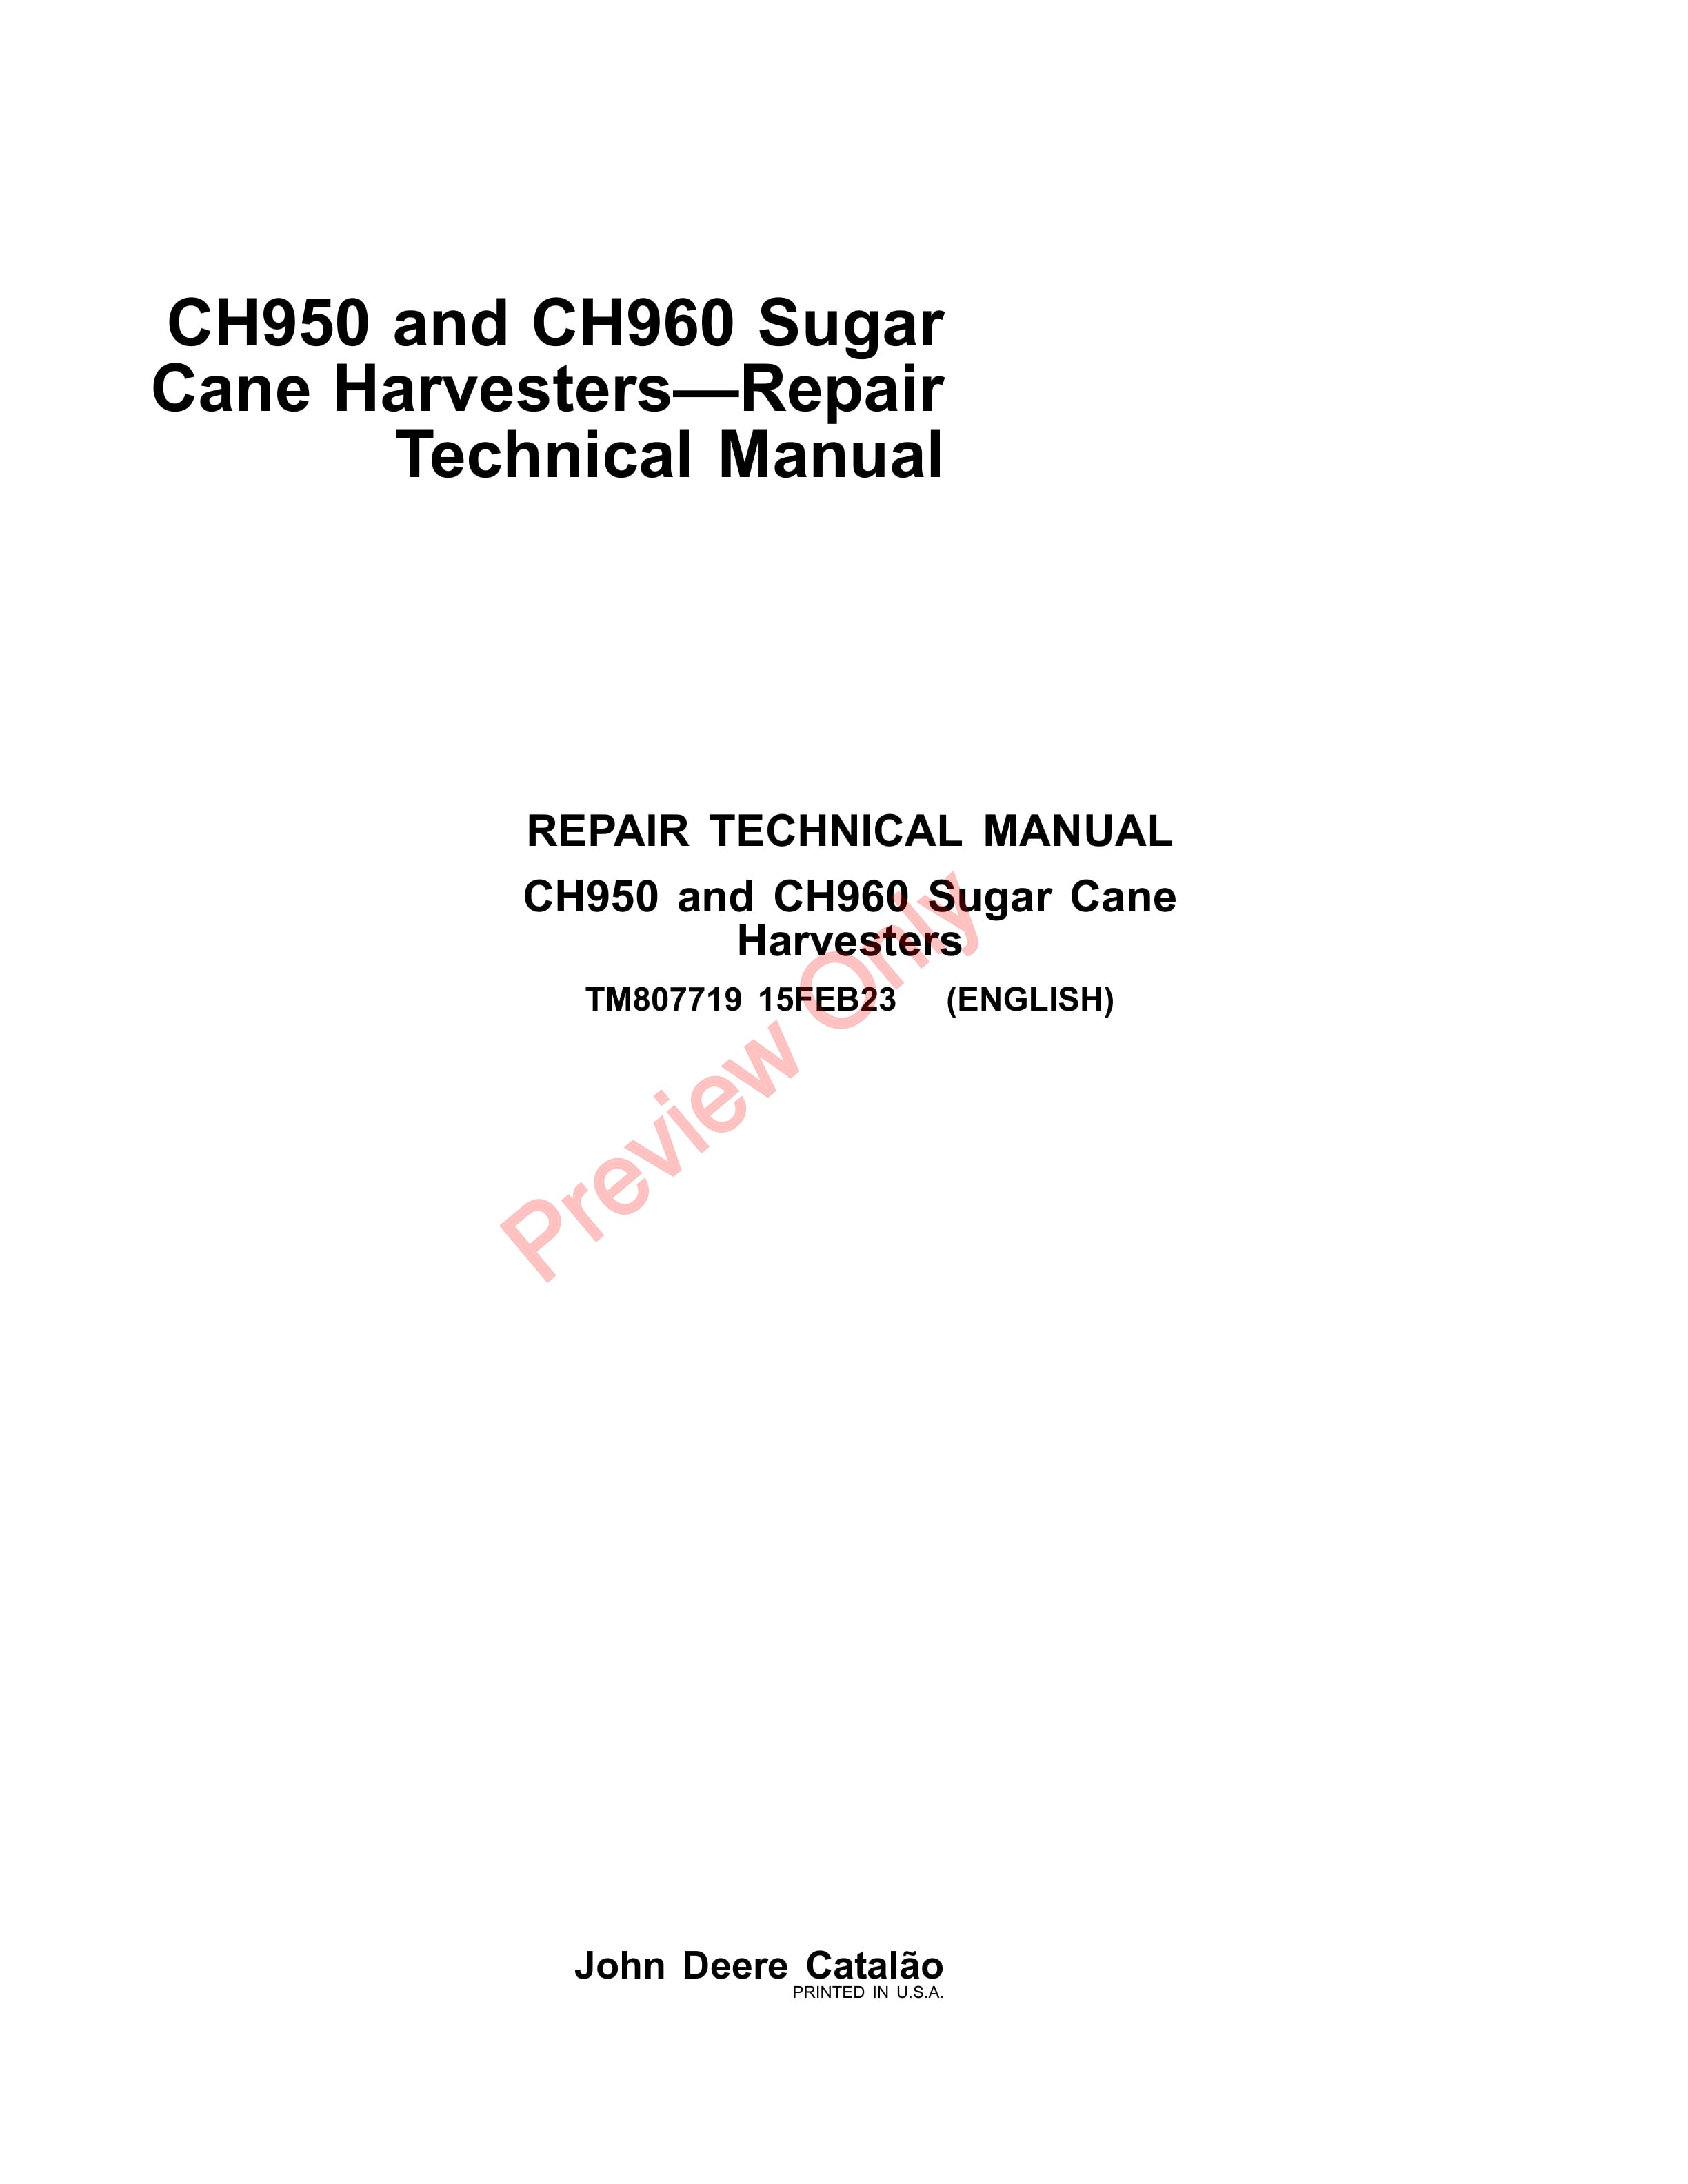 John Deere CH950 and CH960 Sugar Cane Harvesters Repair Technical Manual TM807719 15FEB23-1